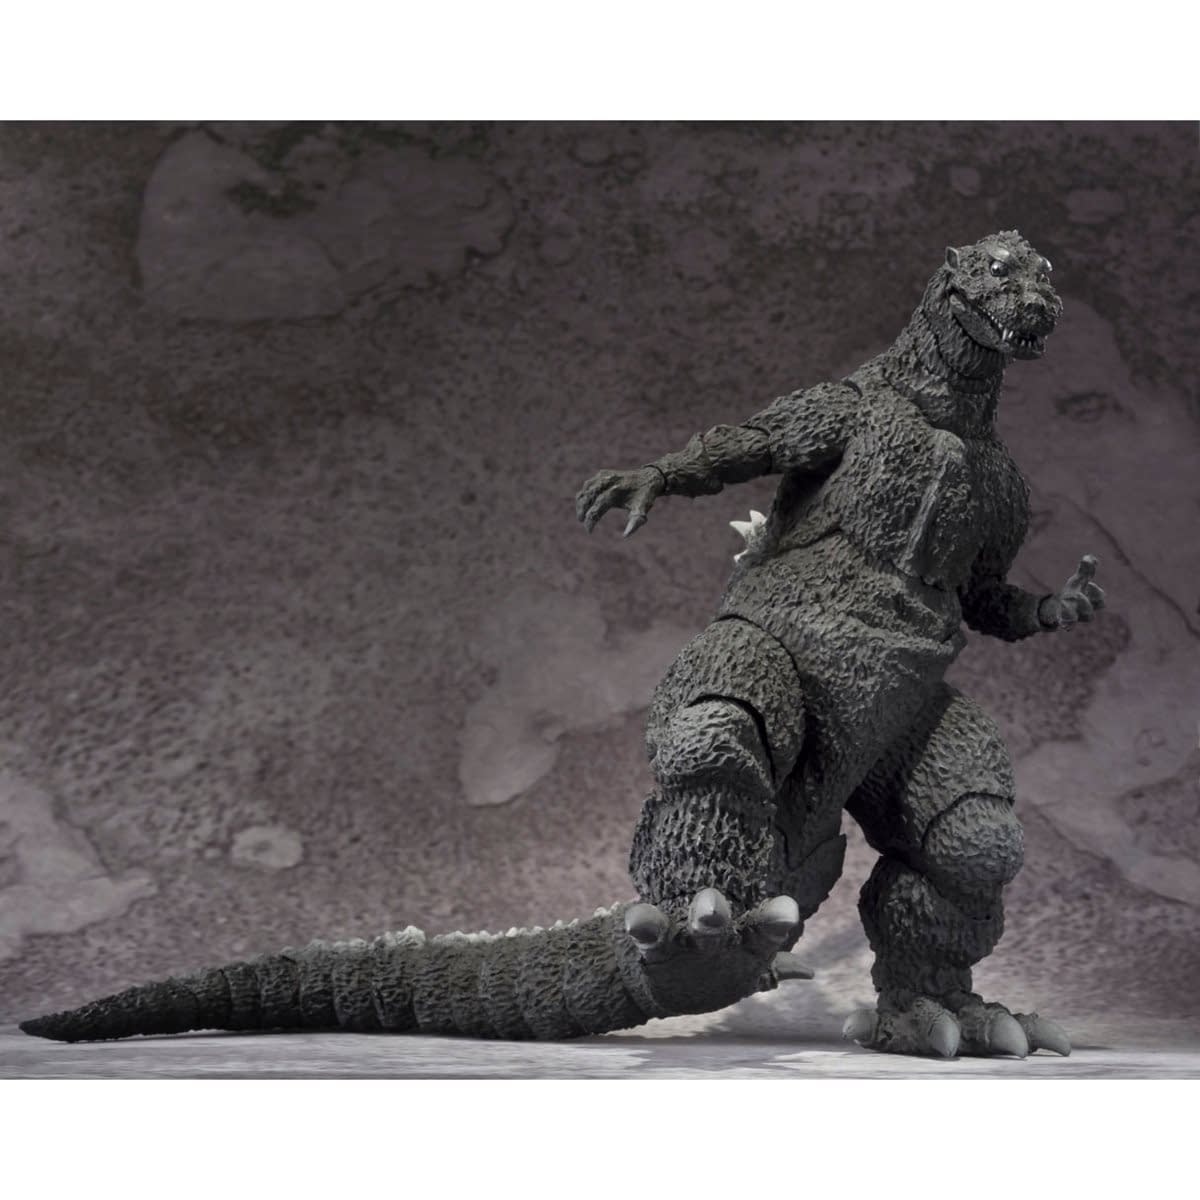 Godzilla Returns with ReReleased SH MonsterArts Figures